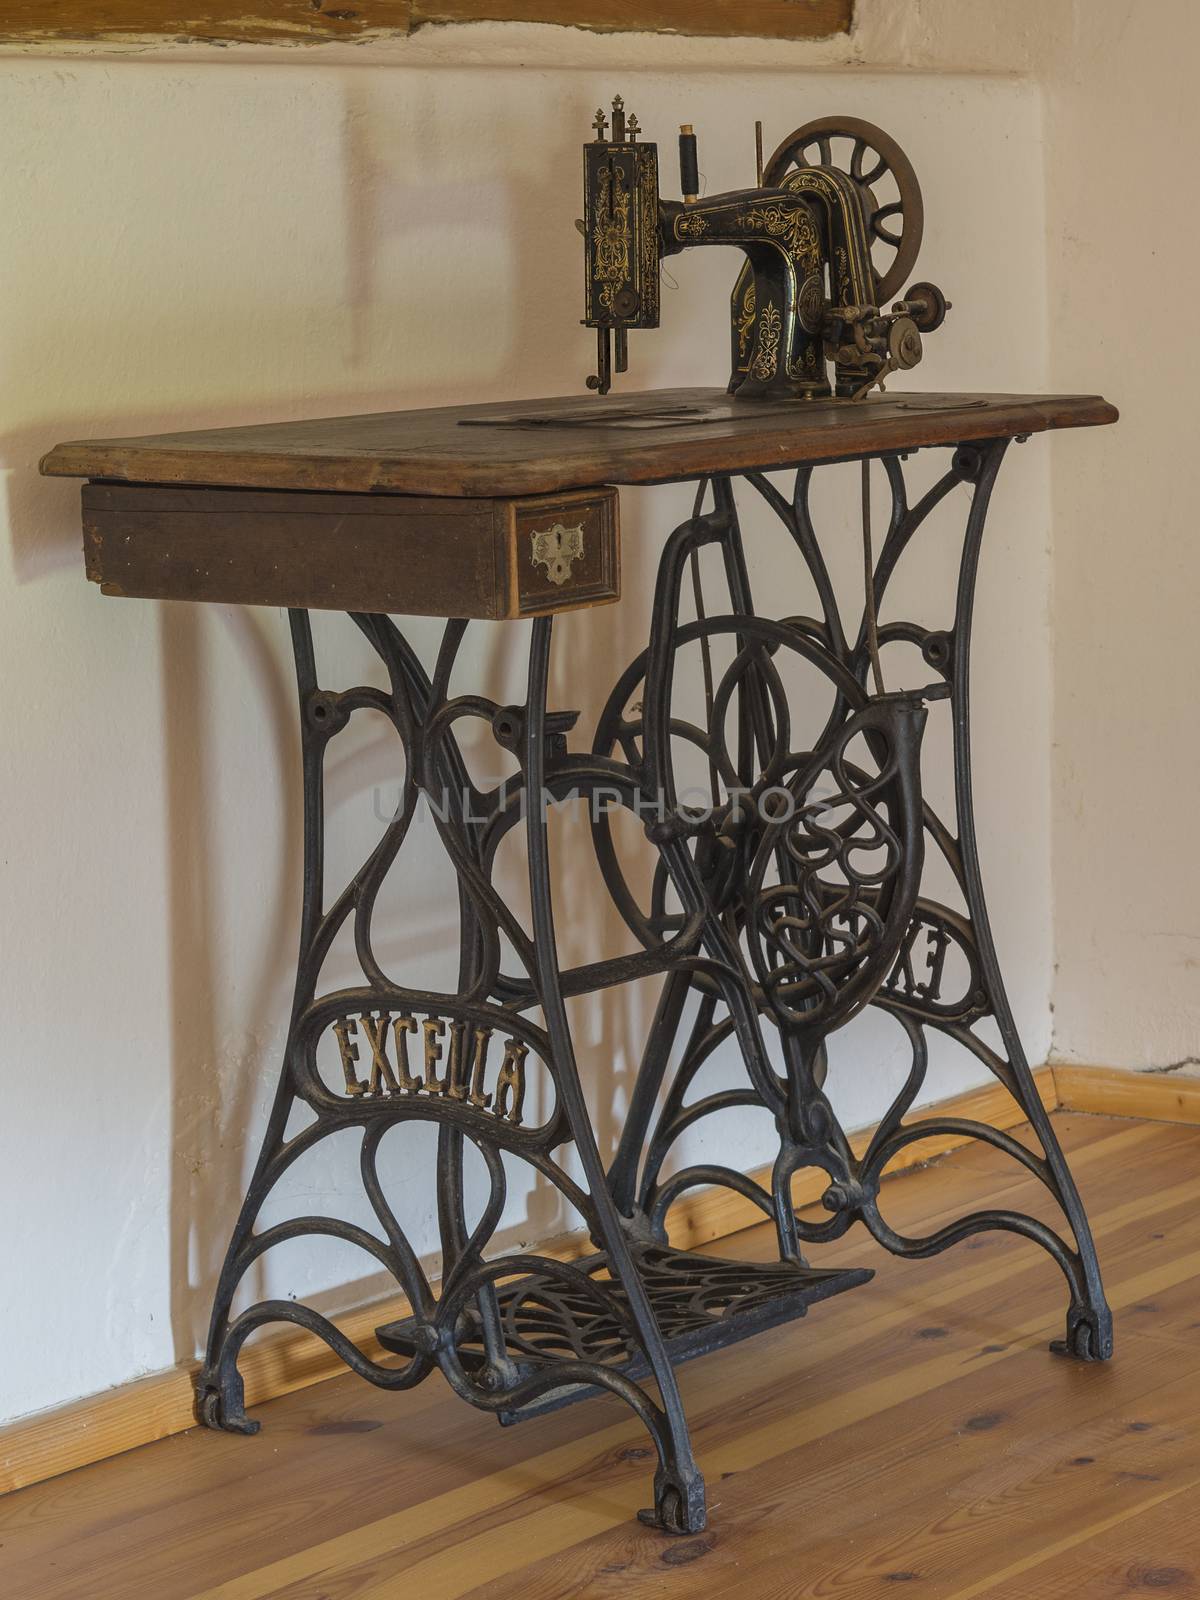 antique wooden iron sewing machine in attic room by Henkeova